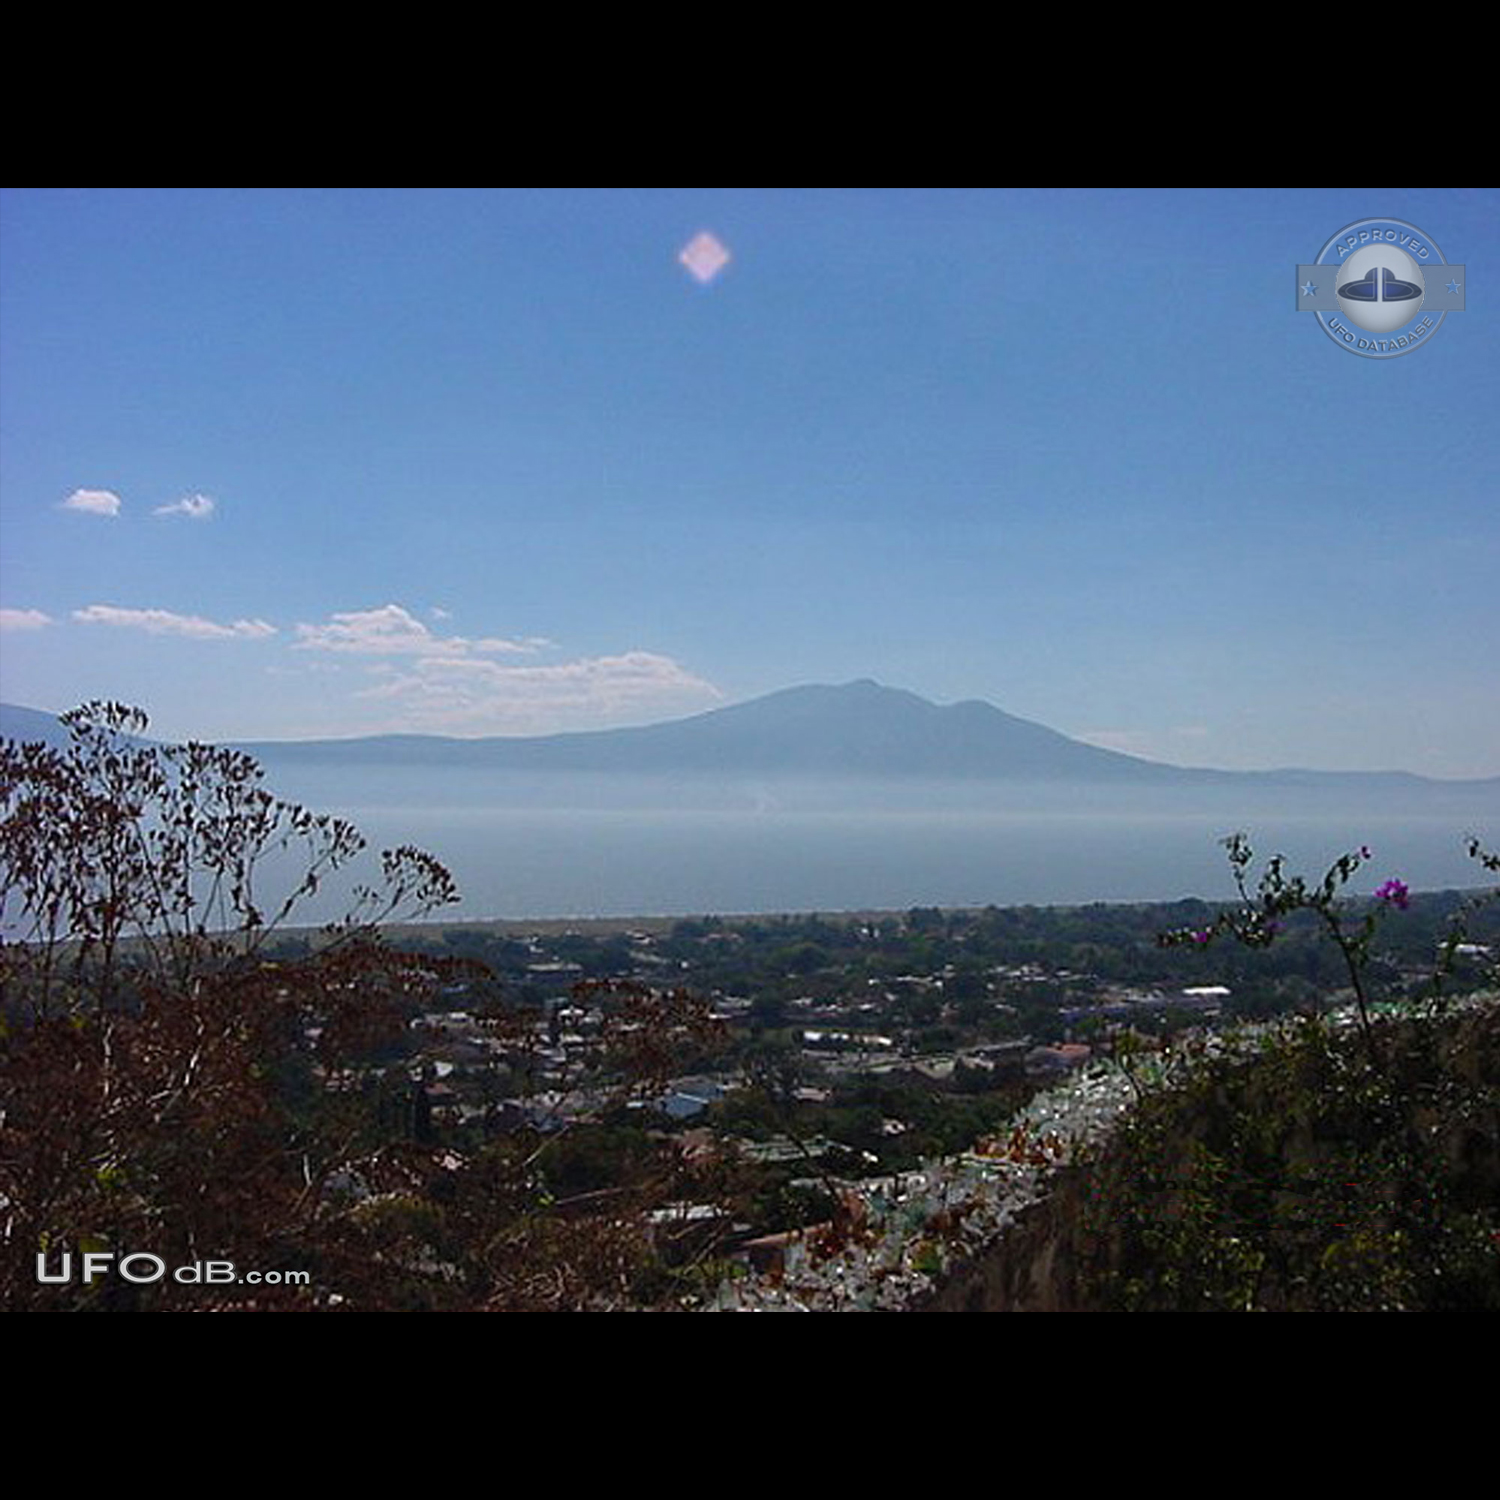 Diamond Shaped UFO over lake Chapala near Ajijic, Jalisco, Mexico 2001 UFO Picture #468-1